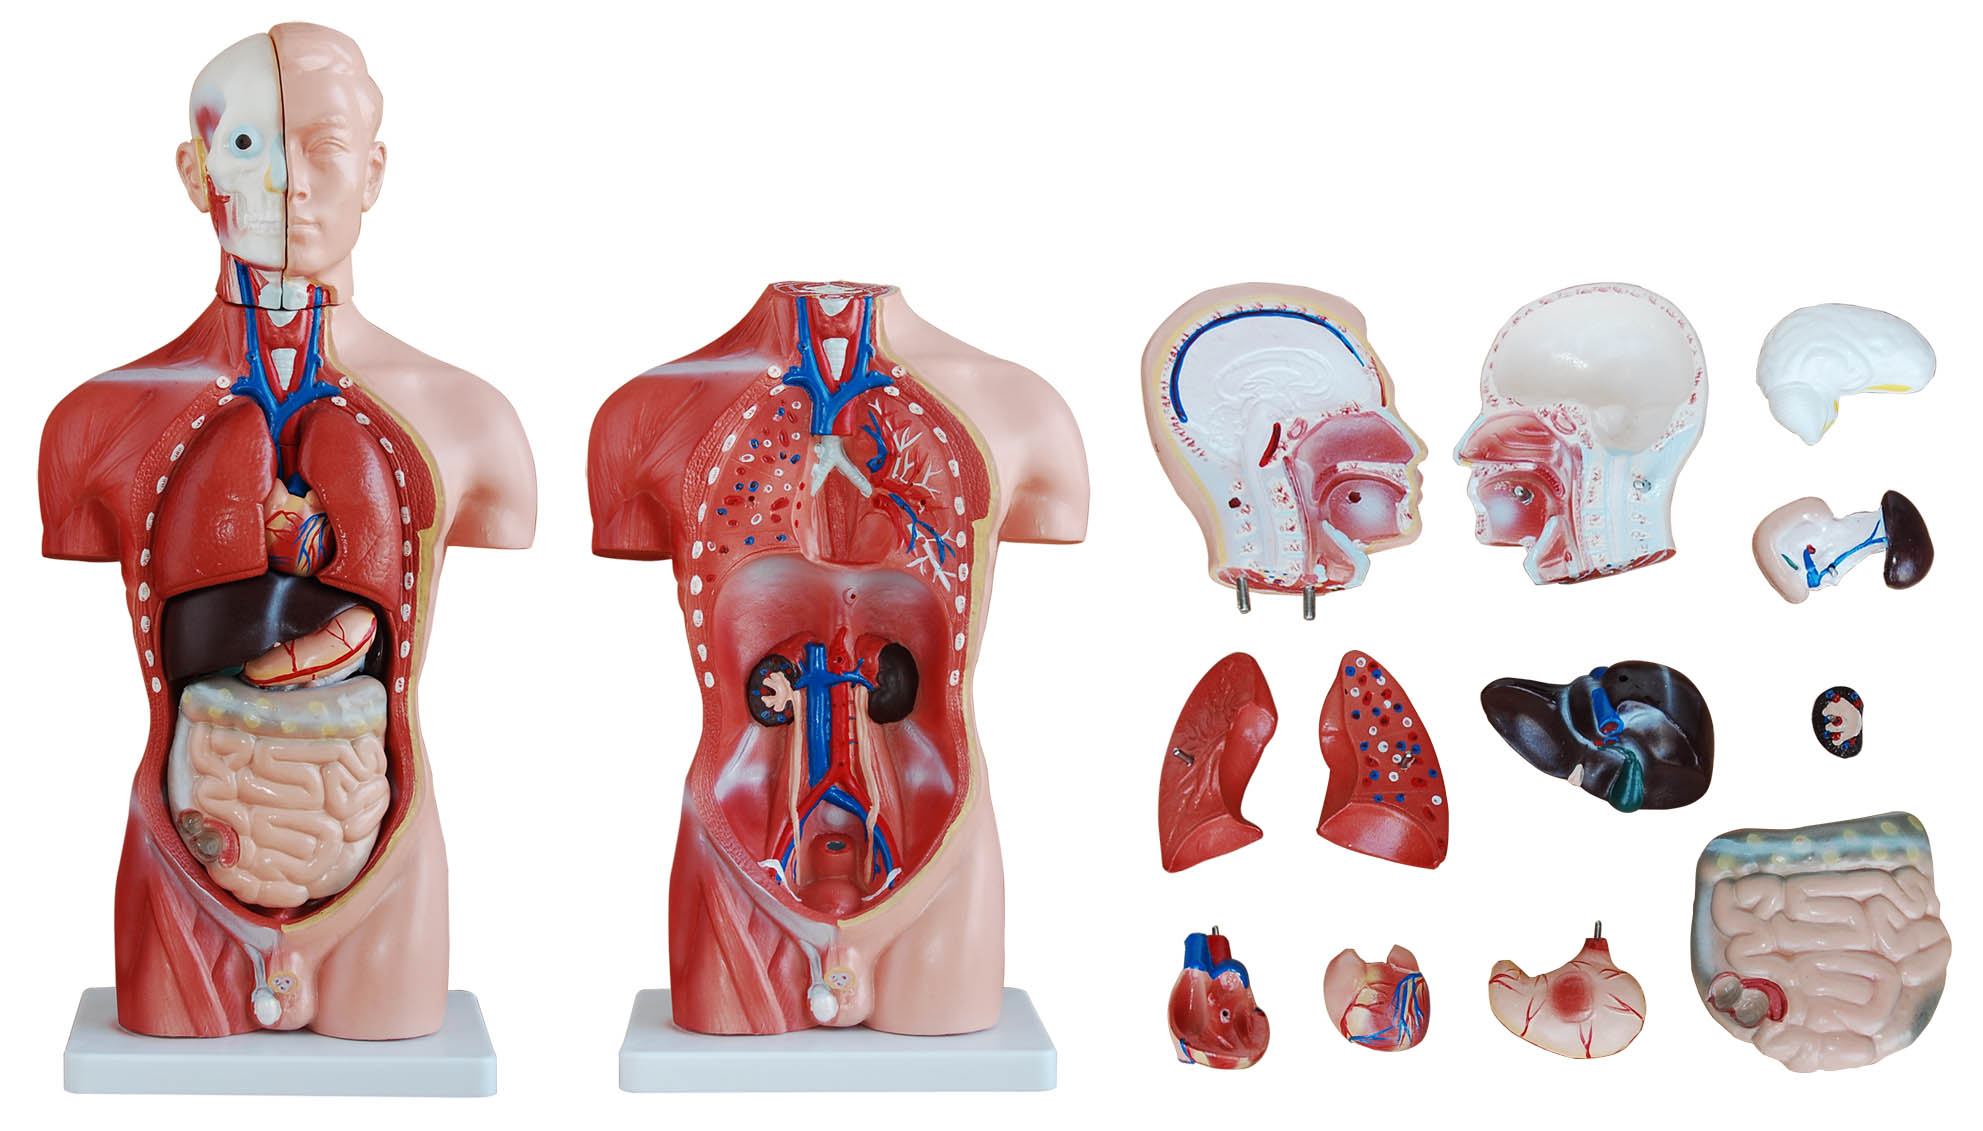 42cm Tall Human Anatomical Male Torso Model | Torso Models ...